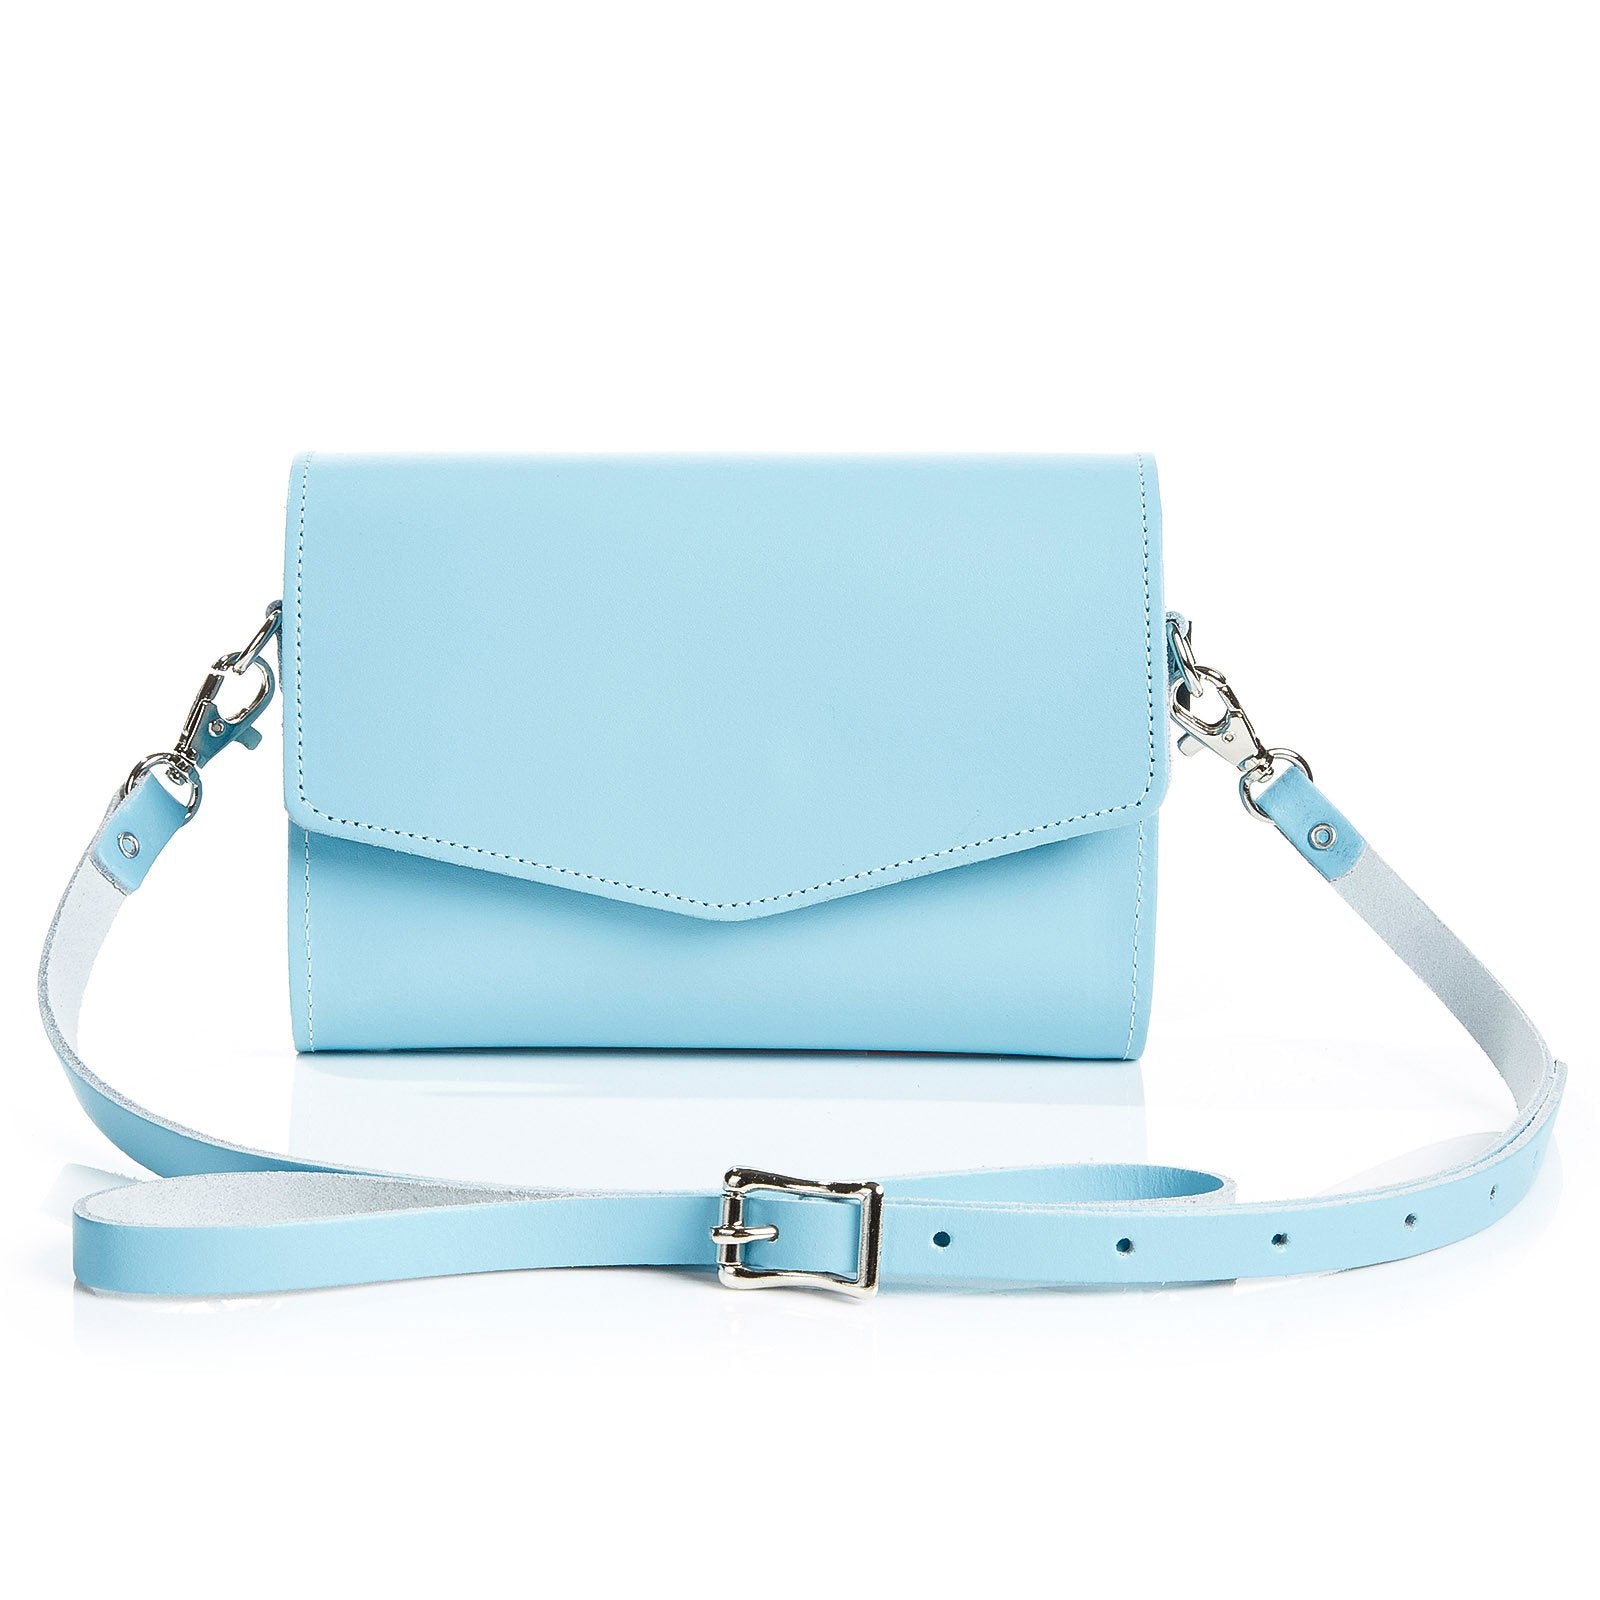 Women’s Handmade Leather Clutch Bag - Pastel Baby Blue One Size Zatchels